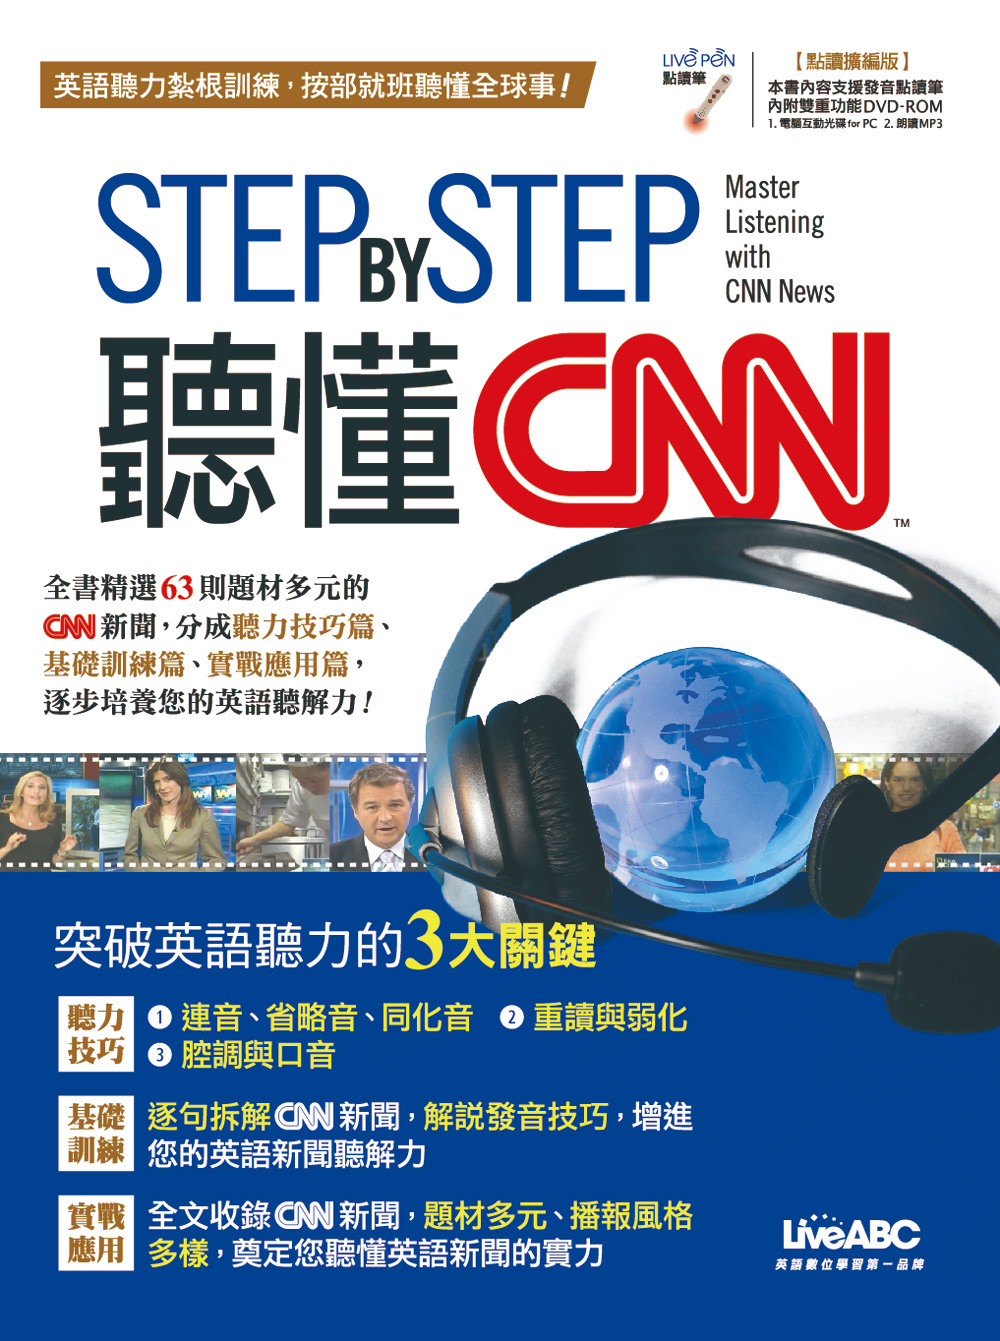 ►GO►最新優惠► [書籍]STEP BY STEP 聽懂CNN(點讀擴編版)+LivePen智慧點讀筆 超值組合